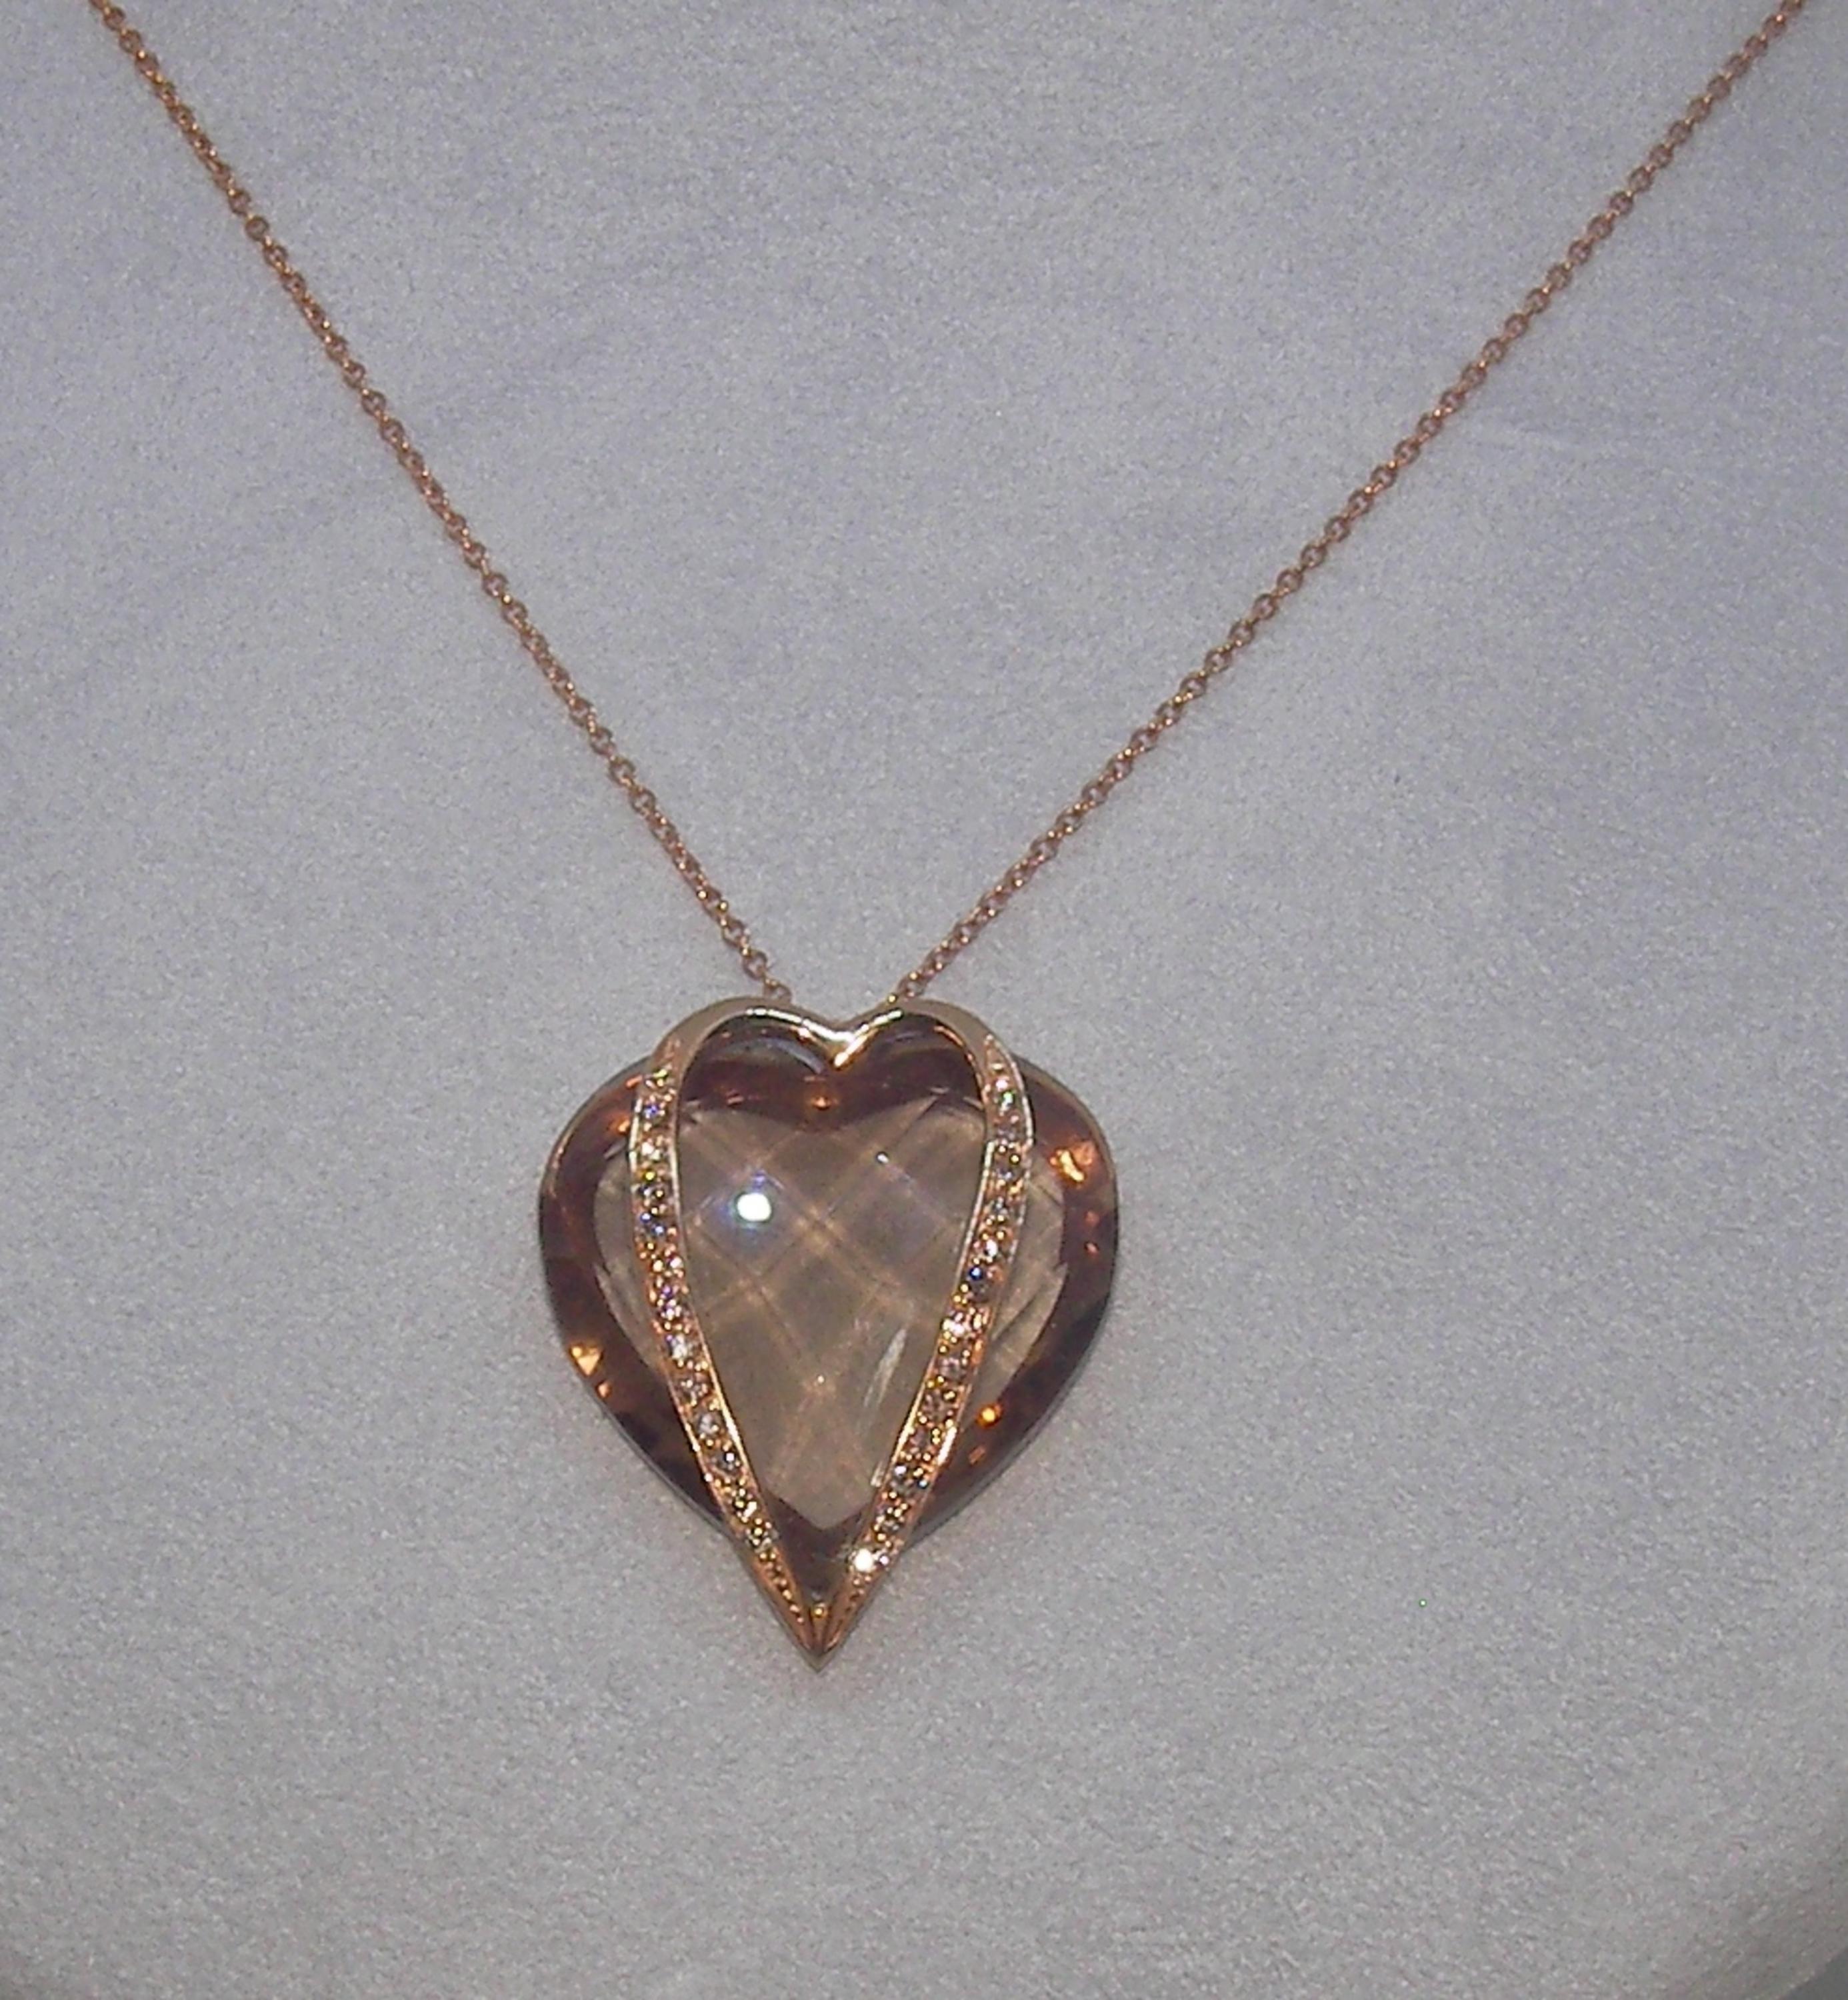 22 carat gold heart pendant